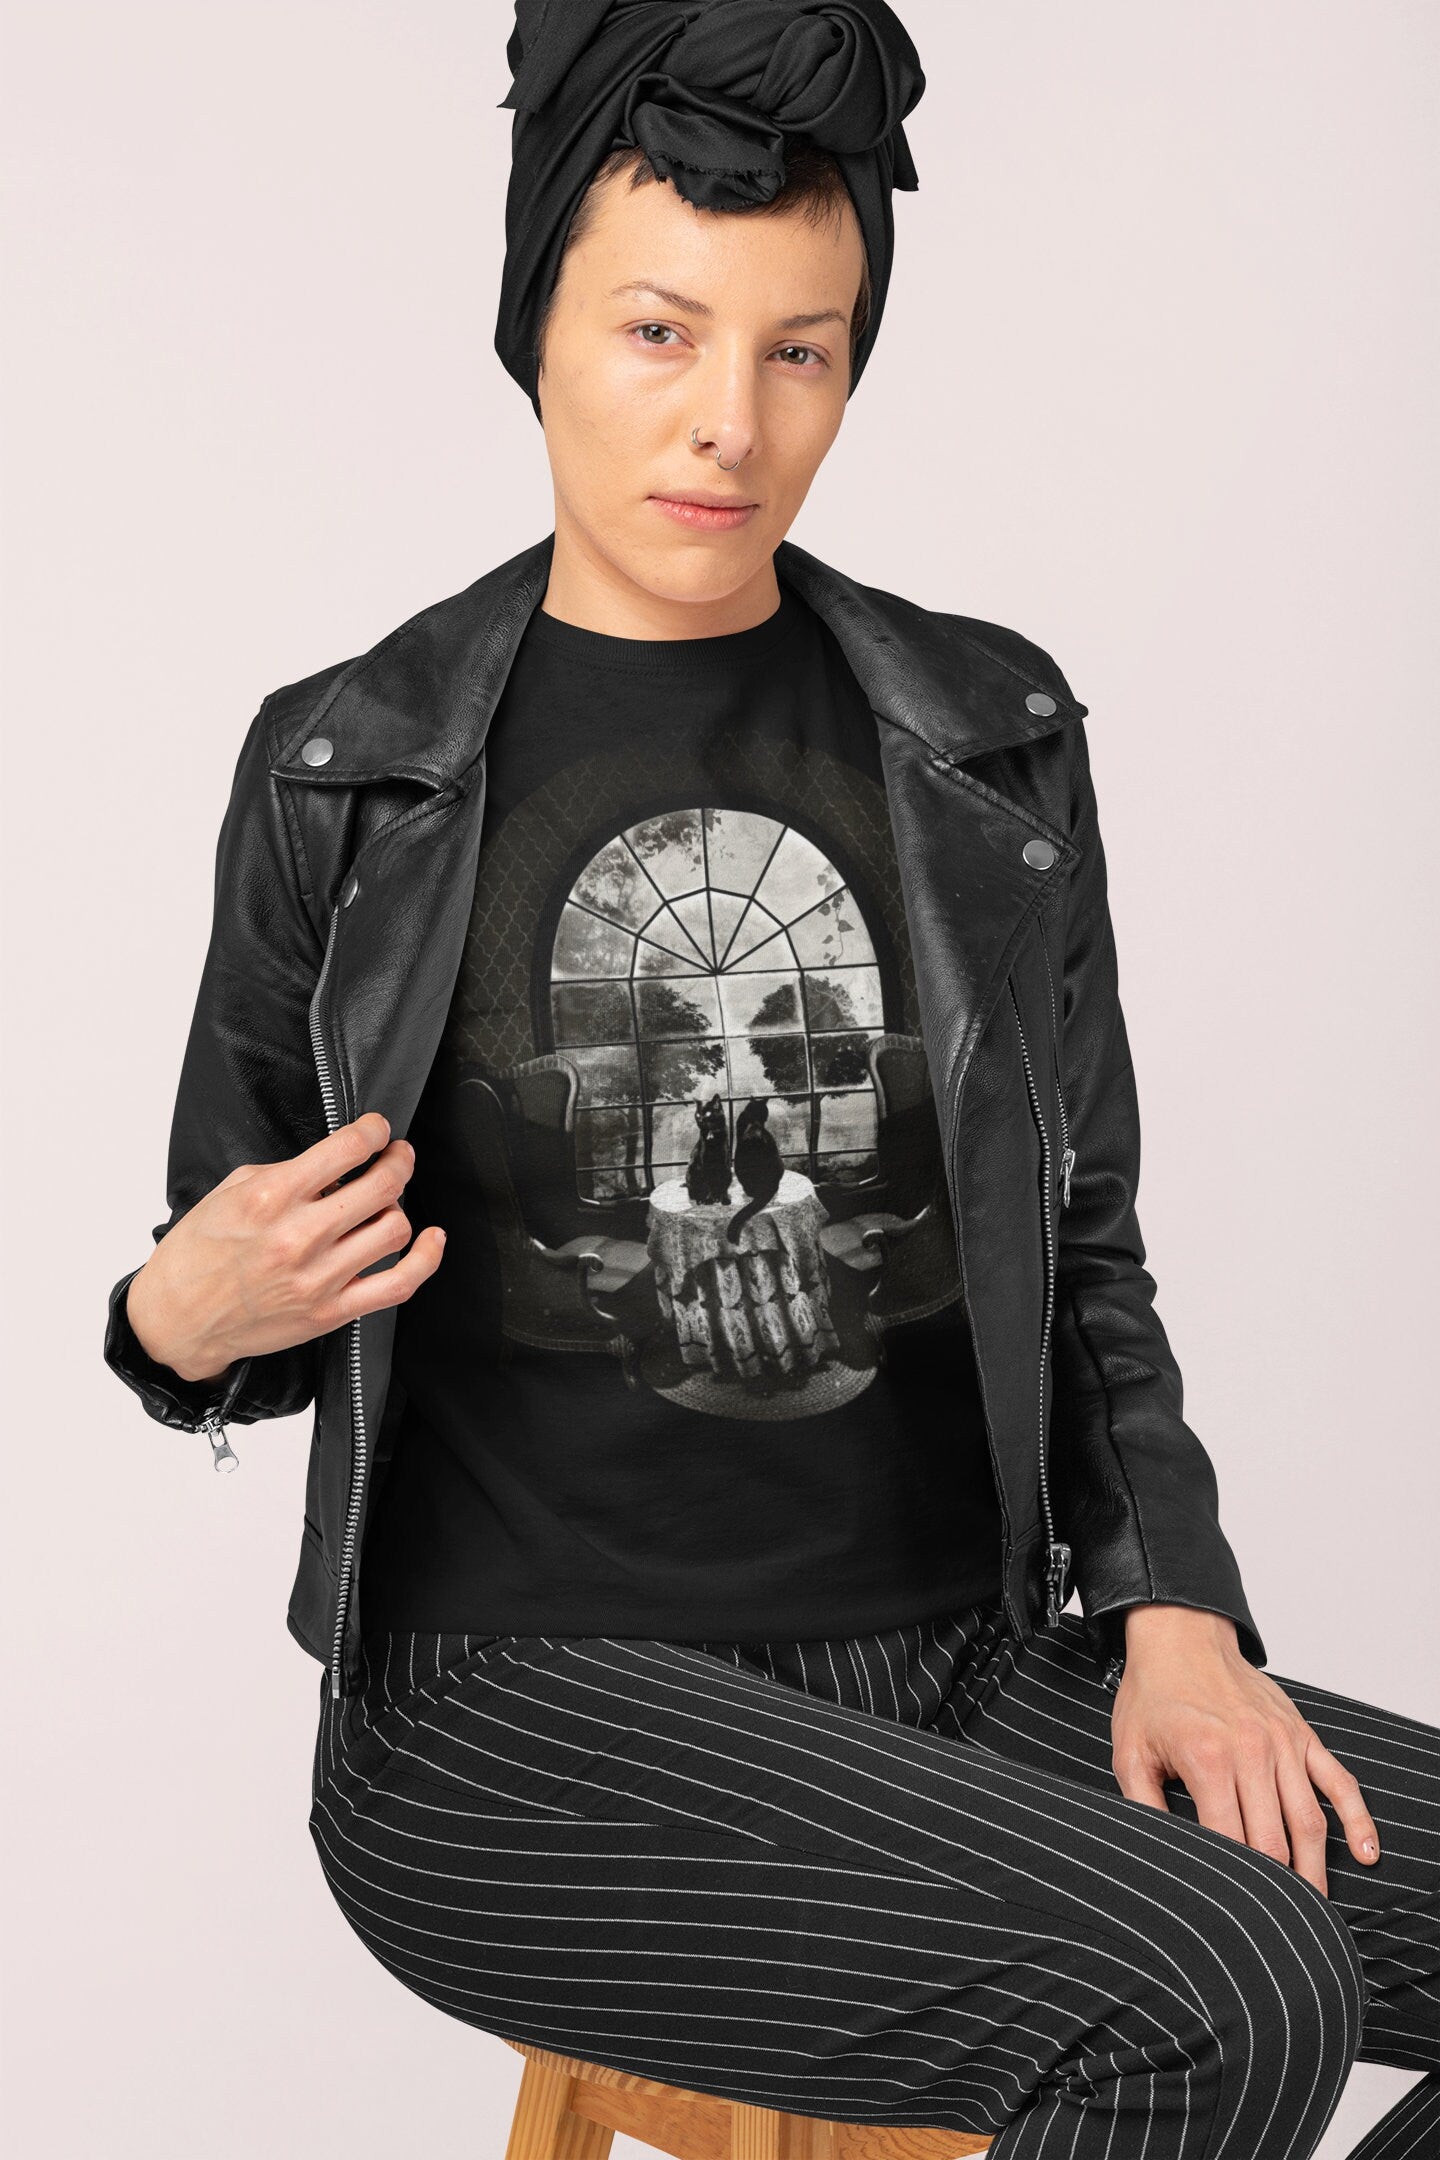 Skull Print Womens T shirt, Skull Illusion Art Tshirt Gift For Her, Floral Sugar Skull Print Boho Graphic Tee, Gothic Bella Canvas T-Shirt